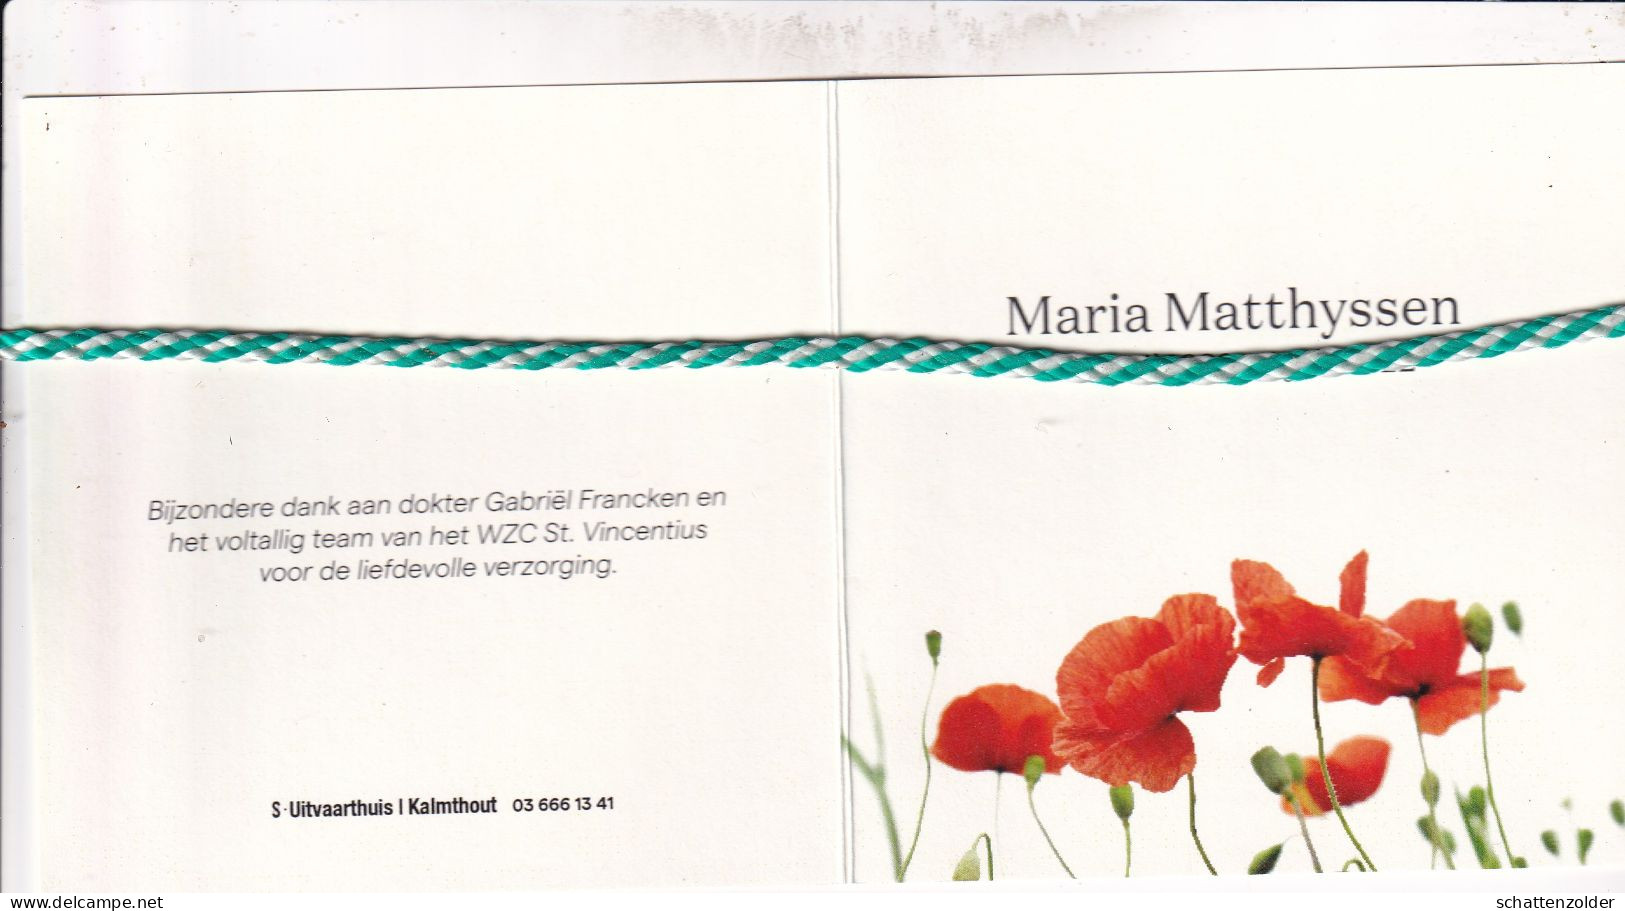 Maria Matthyssen-Francken, Kalmthout 1922, 2022. Honderdjarige. Foto - Décès